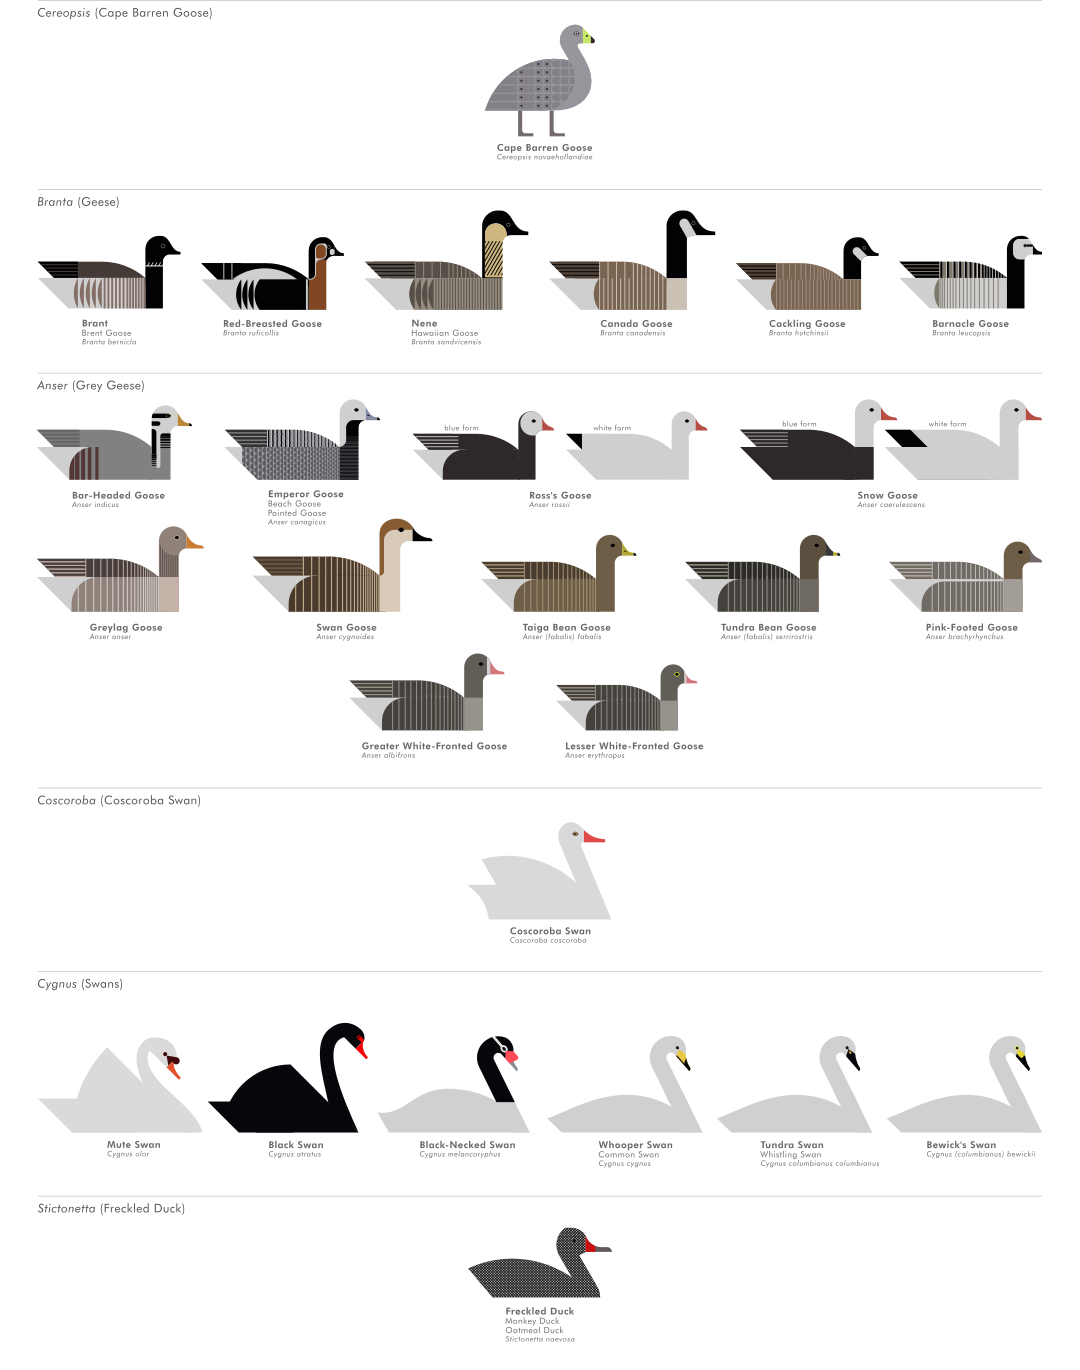 scott partridge - ave - avian vector encyclopedia - swans geese - bird vector art